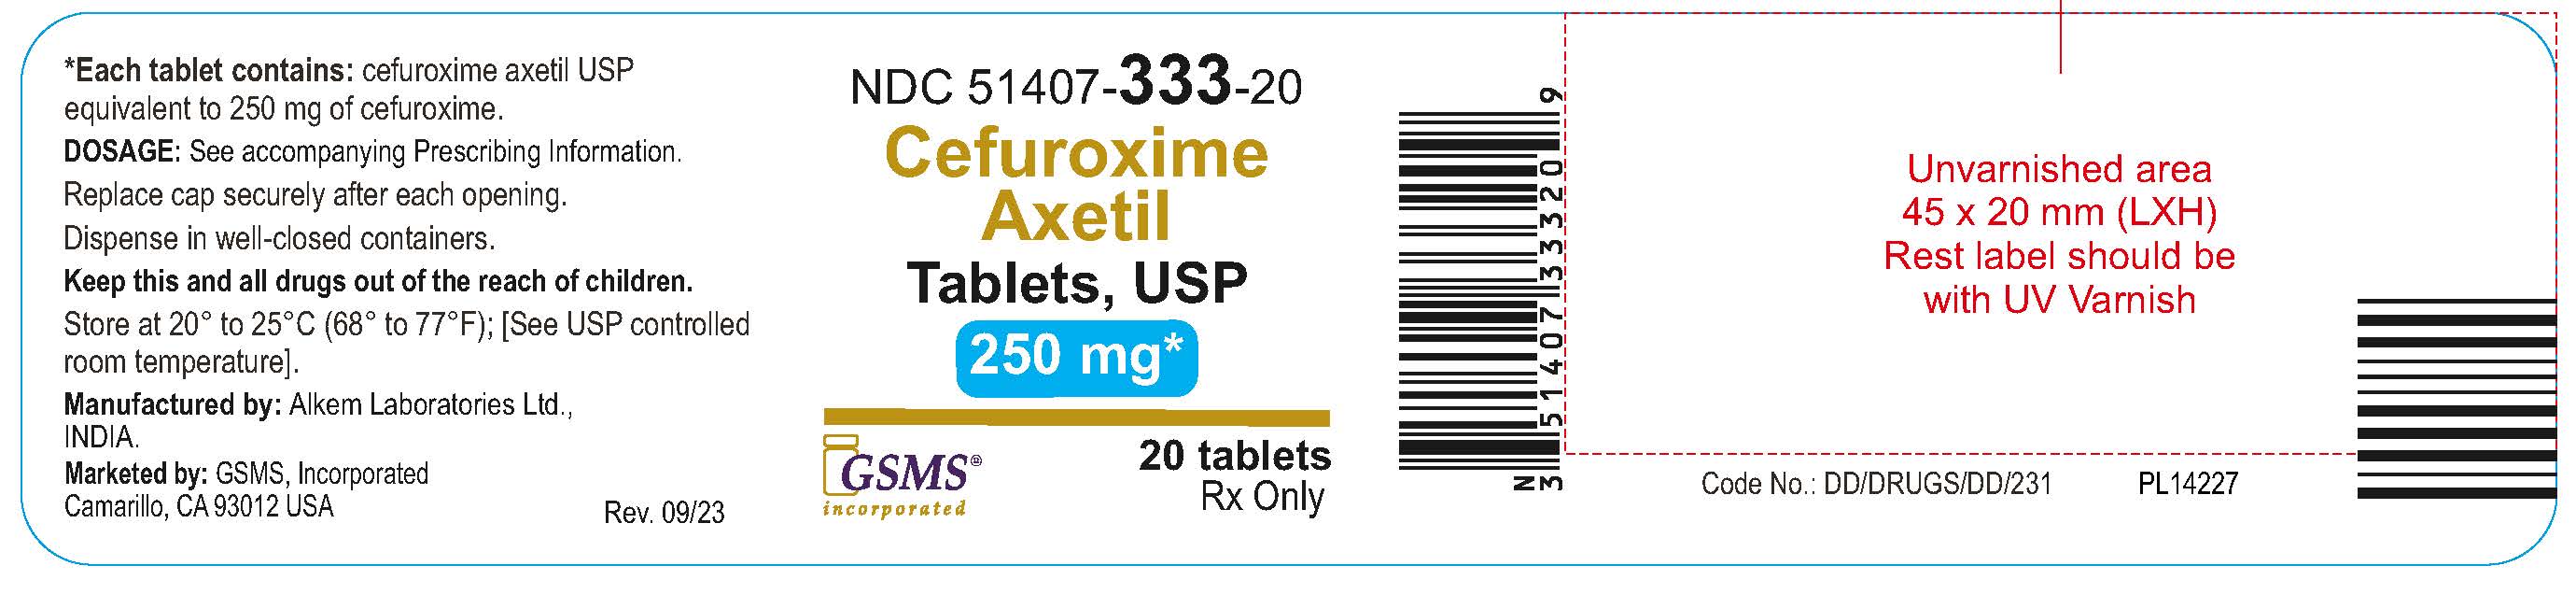 PL - 51407-333-20 - Cefuroxime Axetil Tabs USP 250 mg 20s.jpg